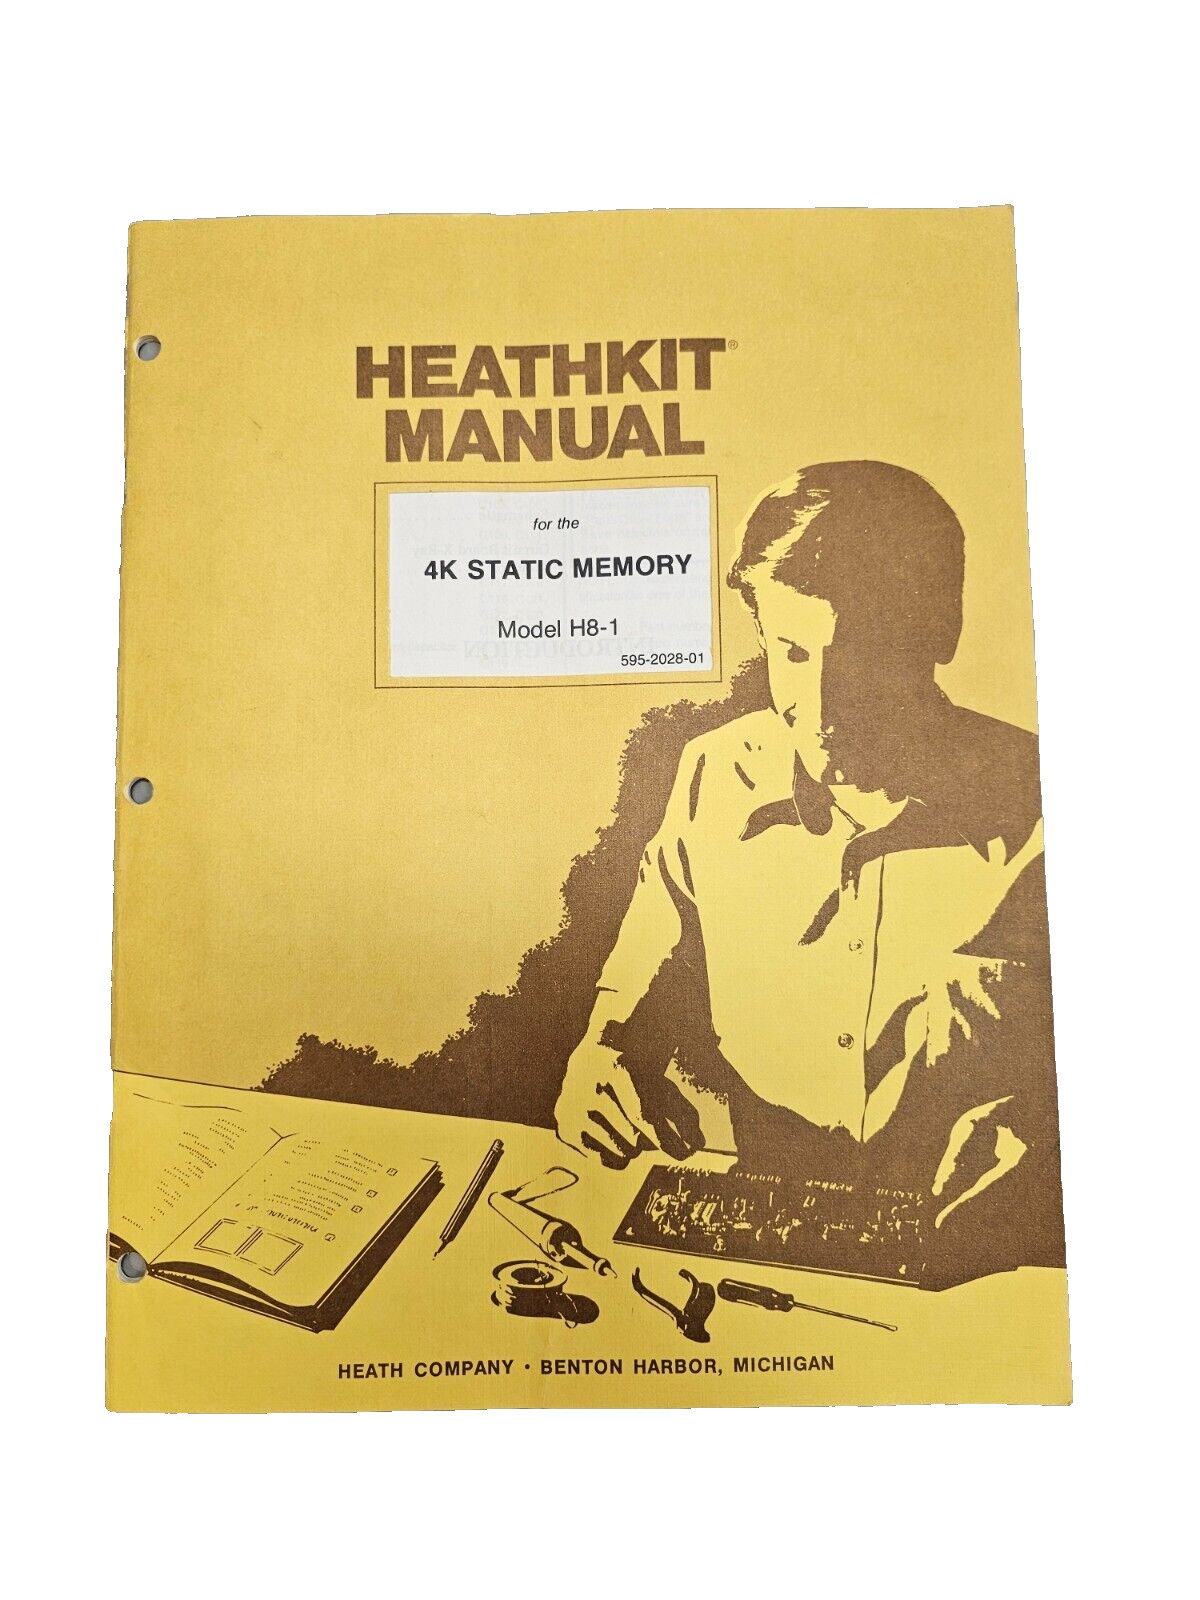 Rare Heathkit 4K Static Memory Manual  595-2028-01